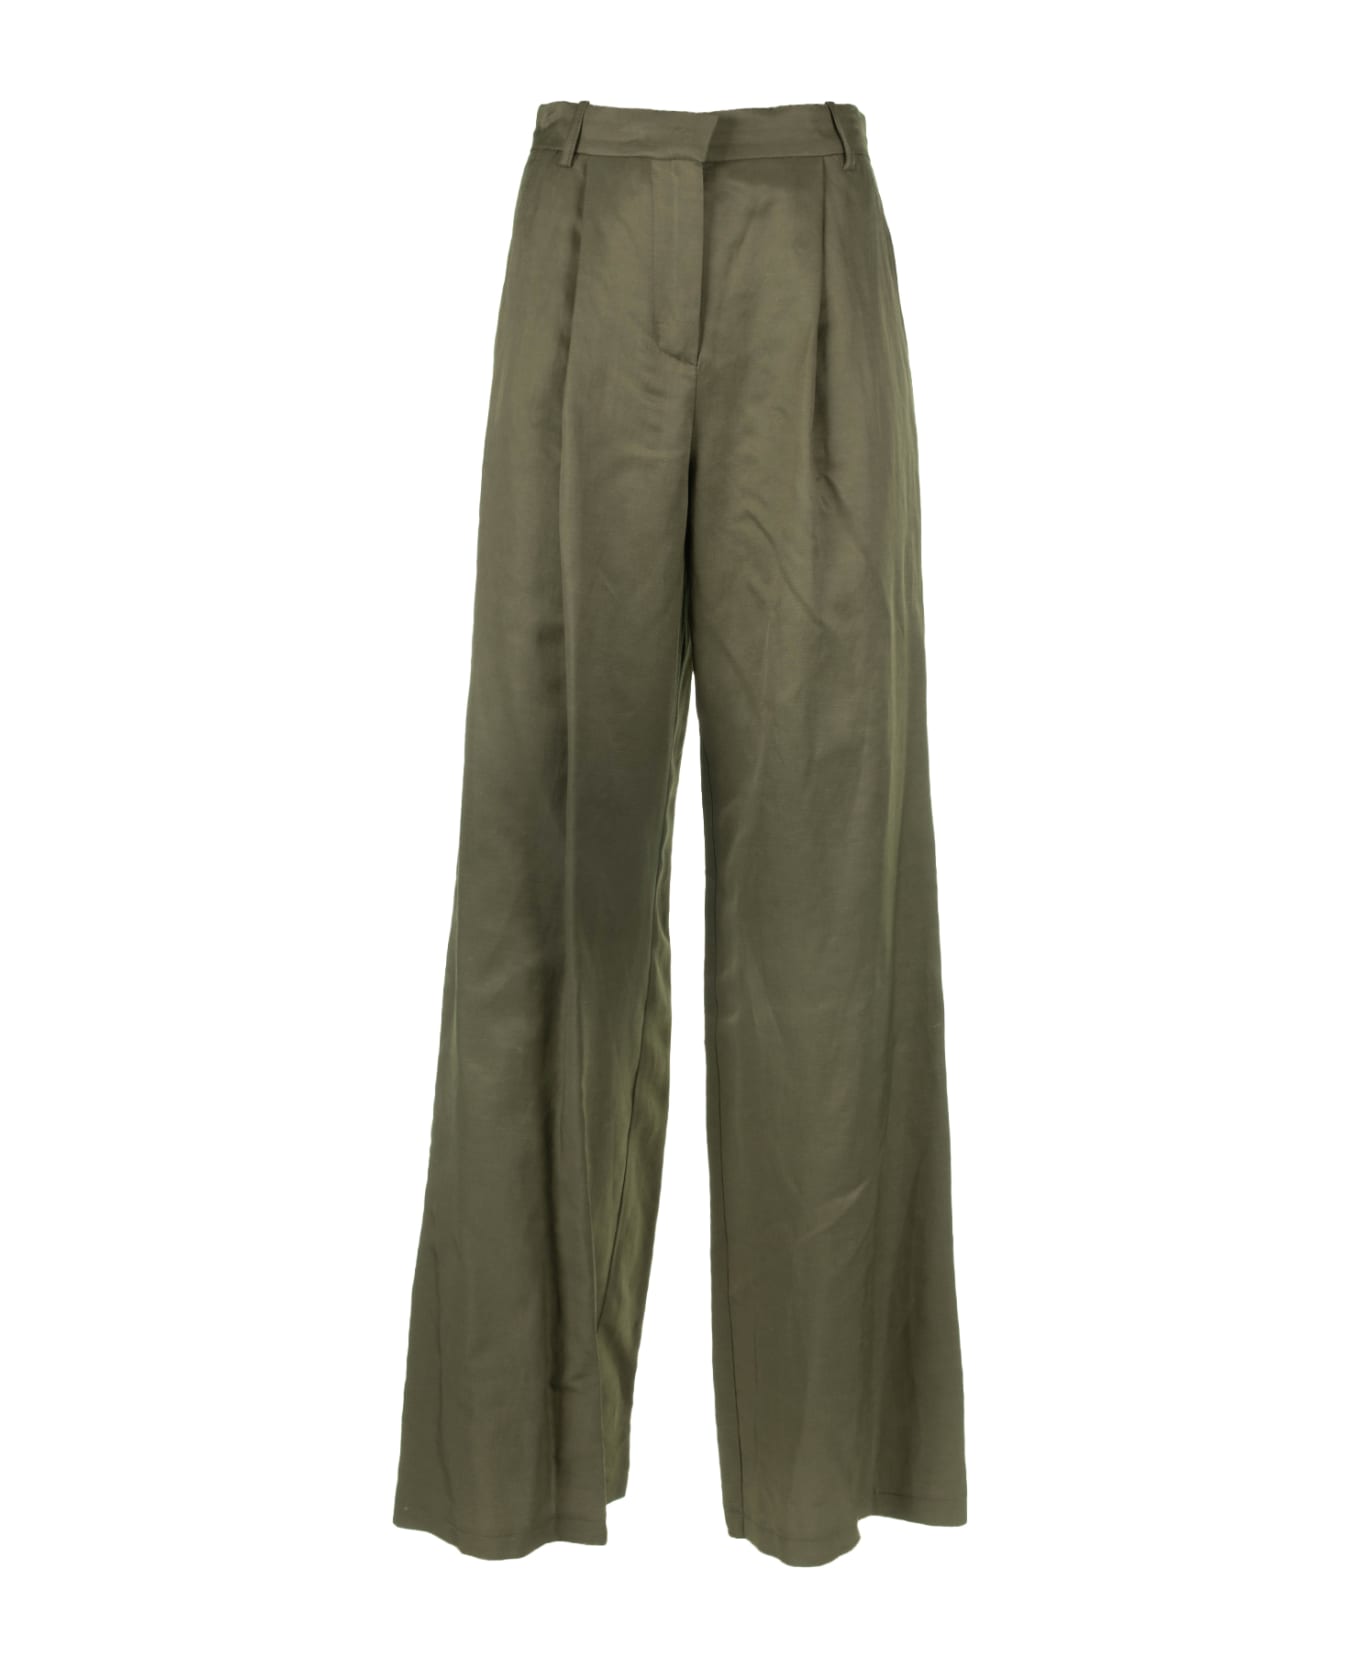 Kaos Military Green High-waisted Wide Leg Trousers - MILITARE ボトムス